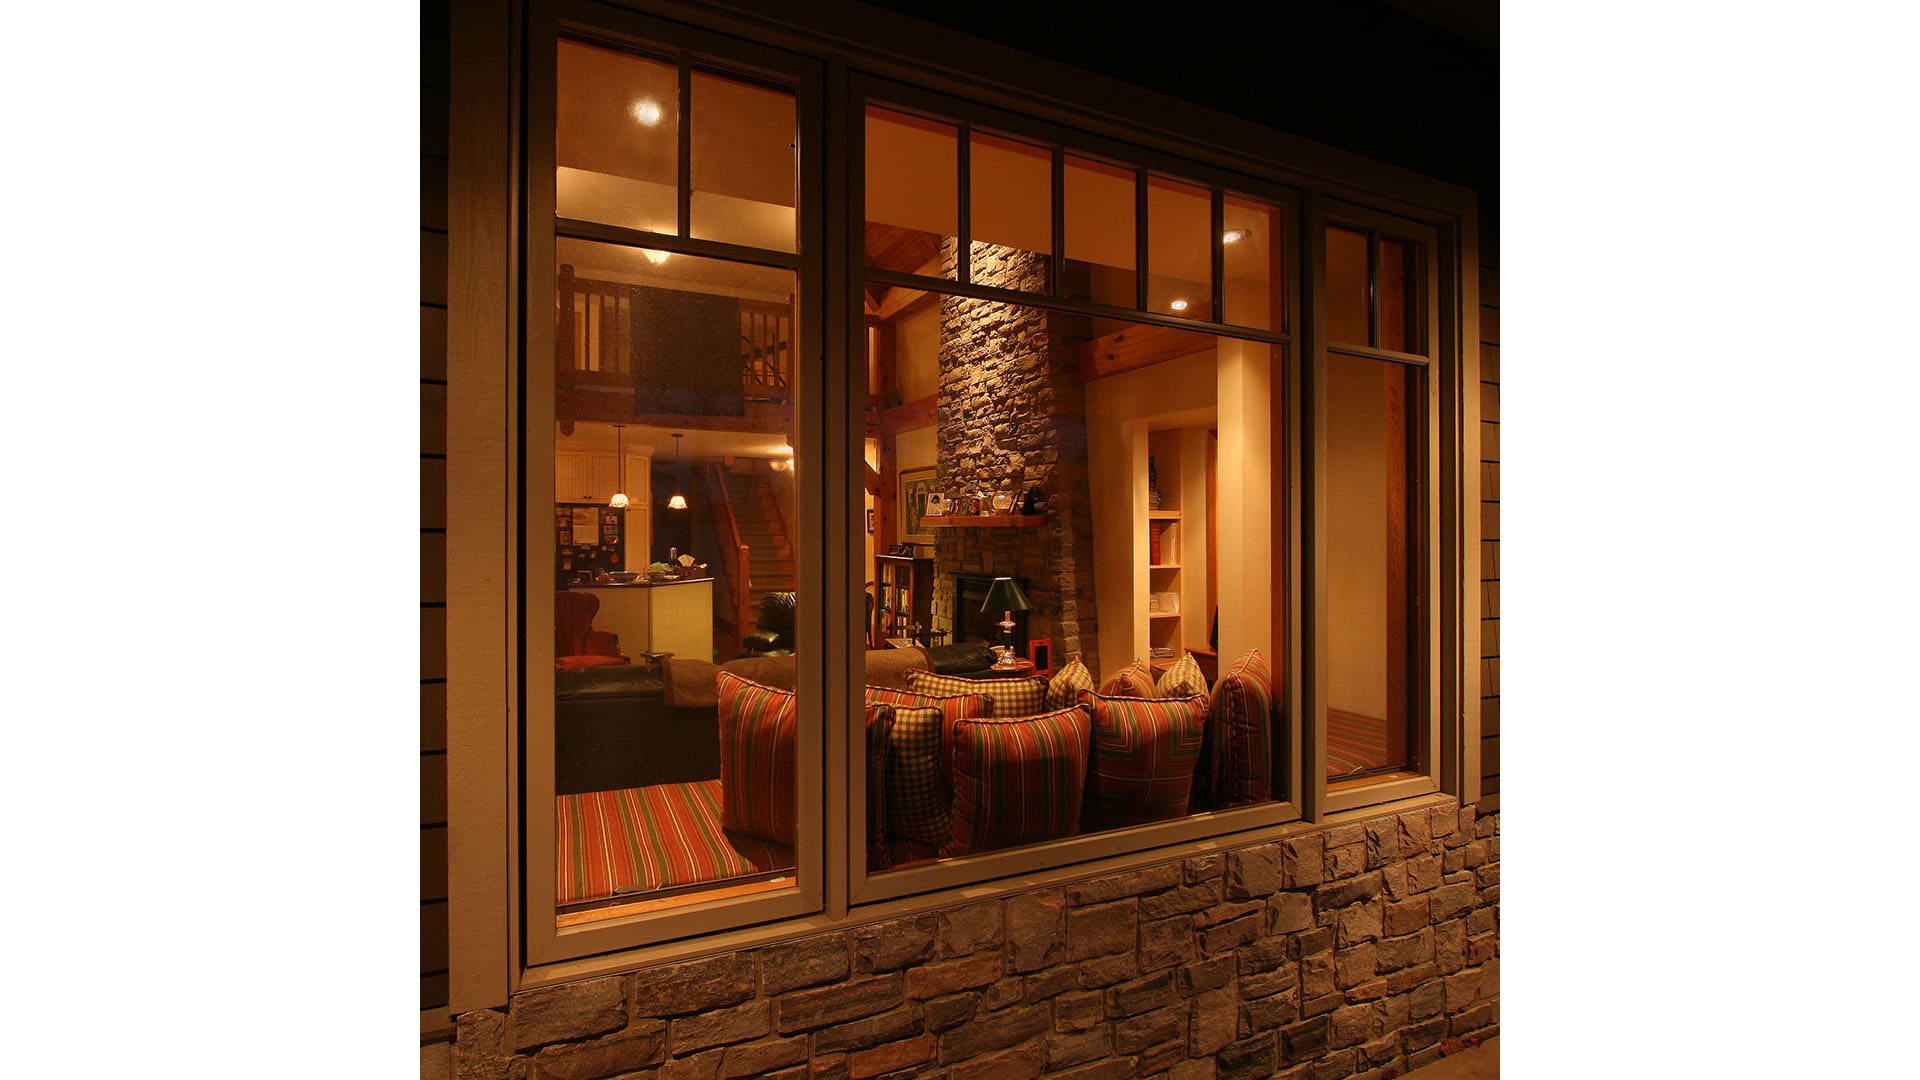 architect designed lakefront home - muskoka - stone fireplace thru windows